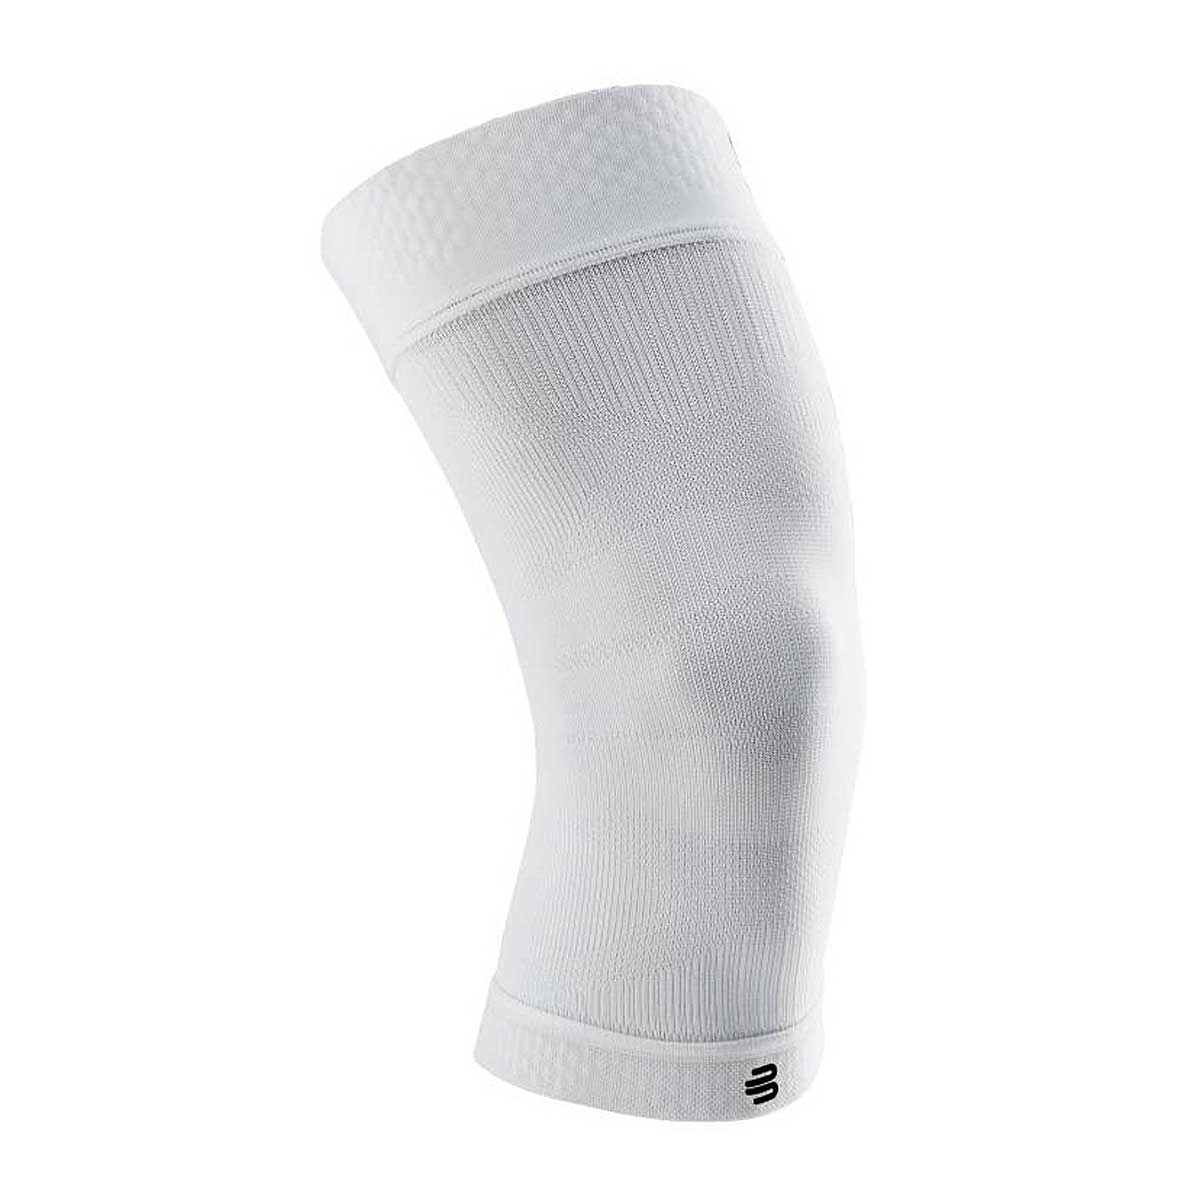 Bauerfeind Sports Compression Knee Support, White